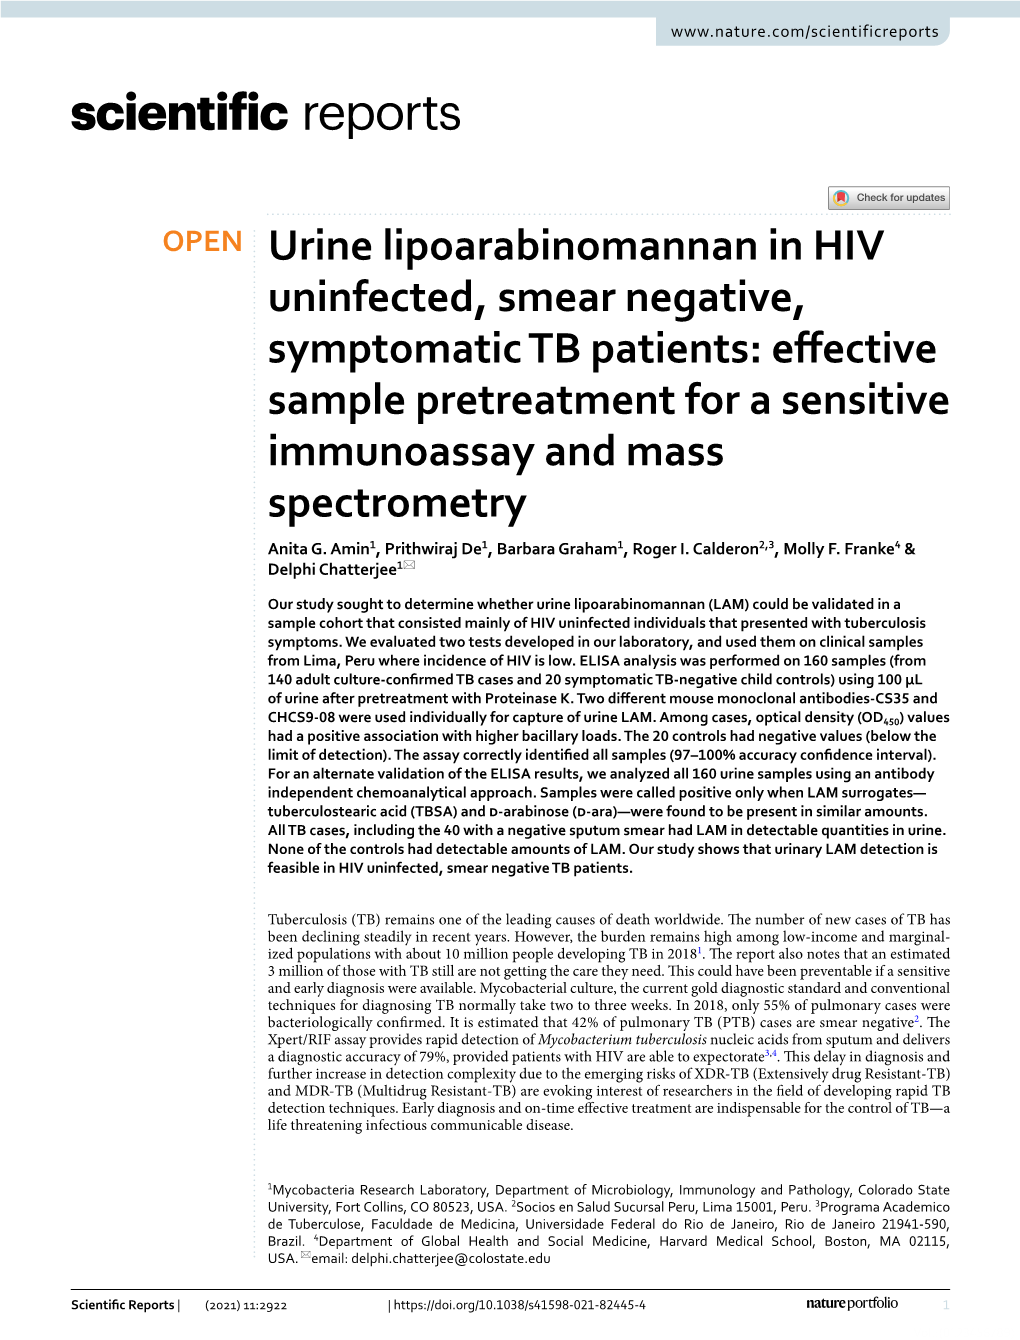 Urine Lipoarabinomannan in HIV Uninfected, Smear Negative